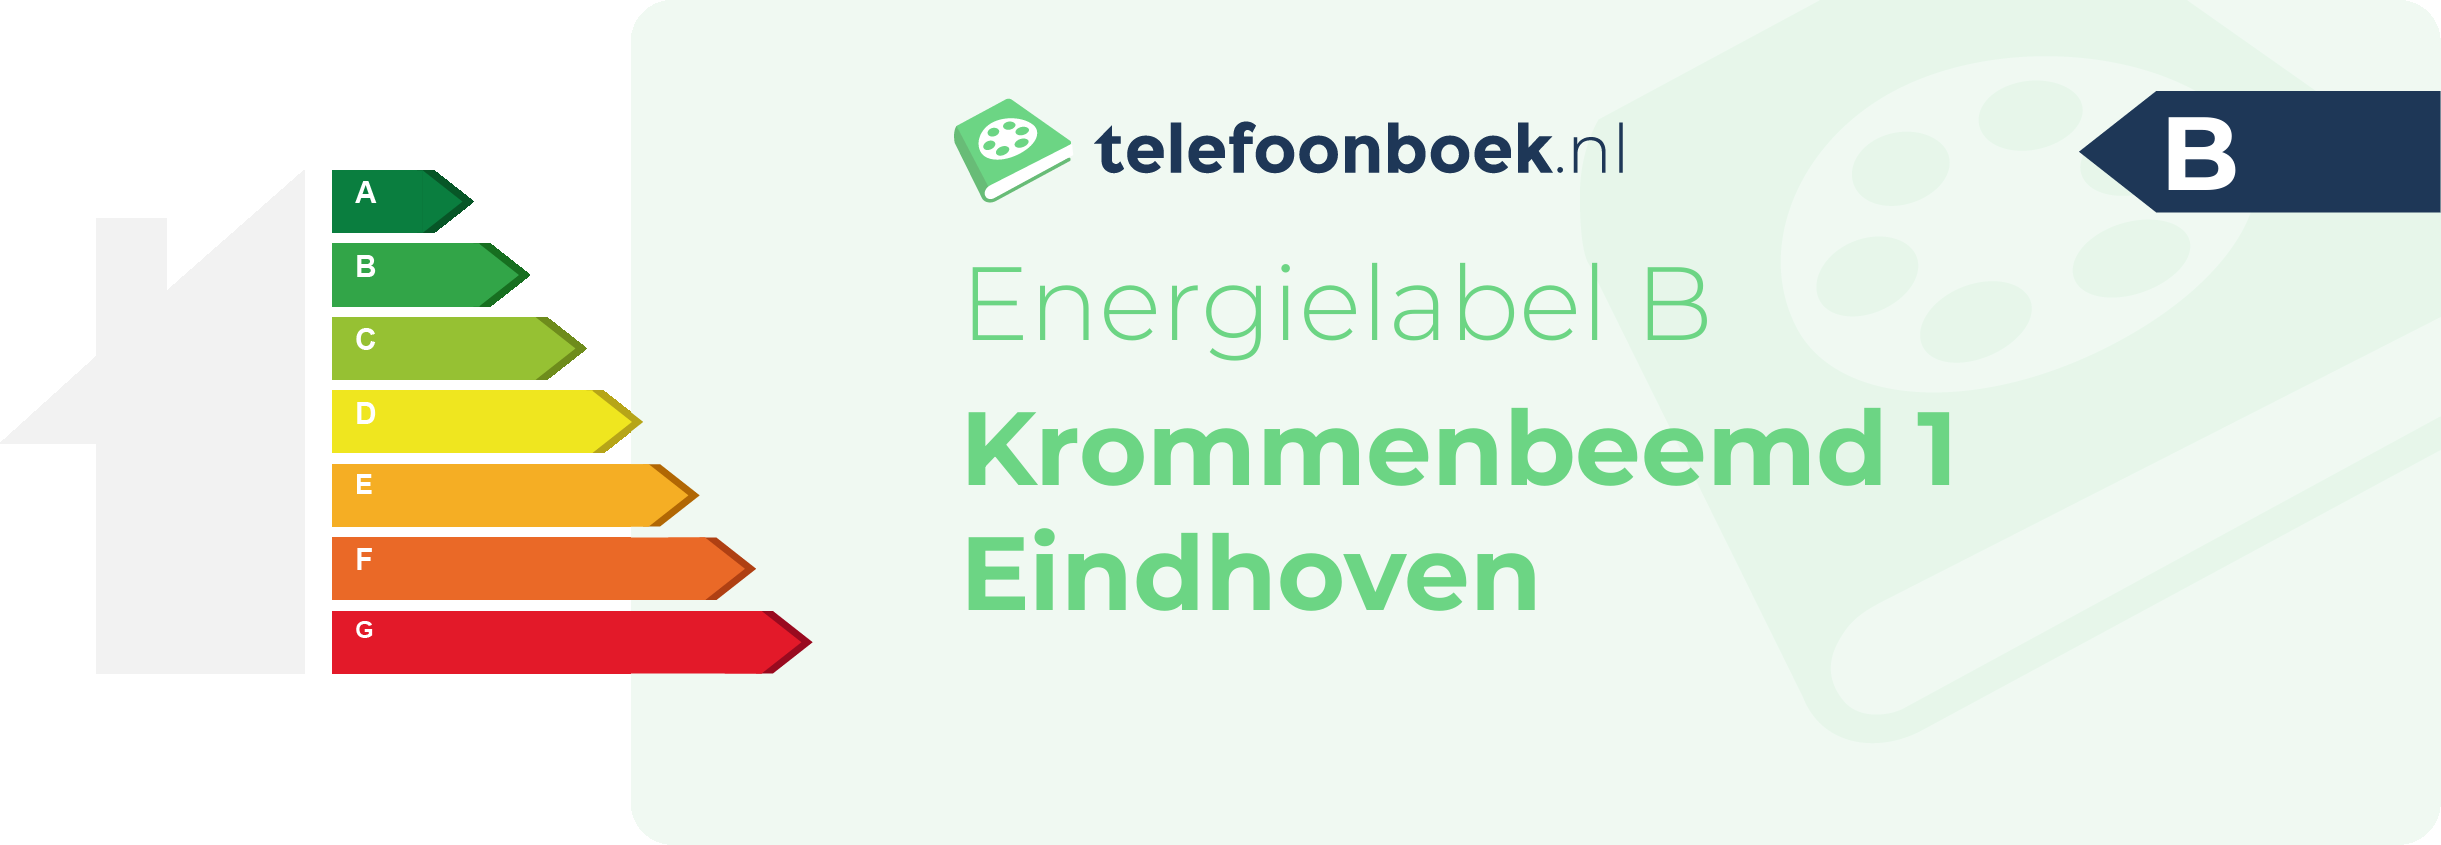 Energielabel Krommenbeemd 1 Eindhoven